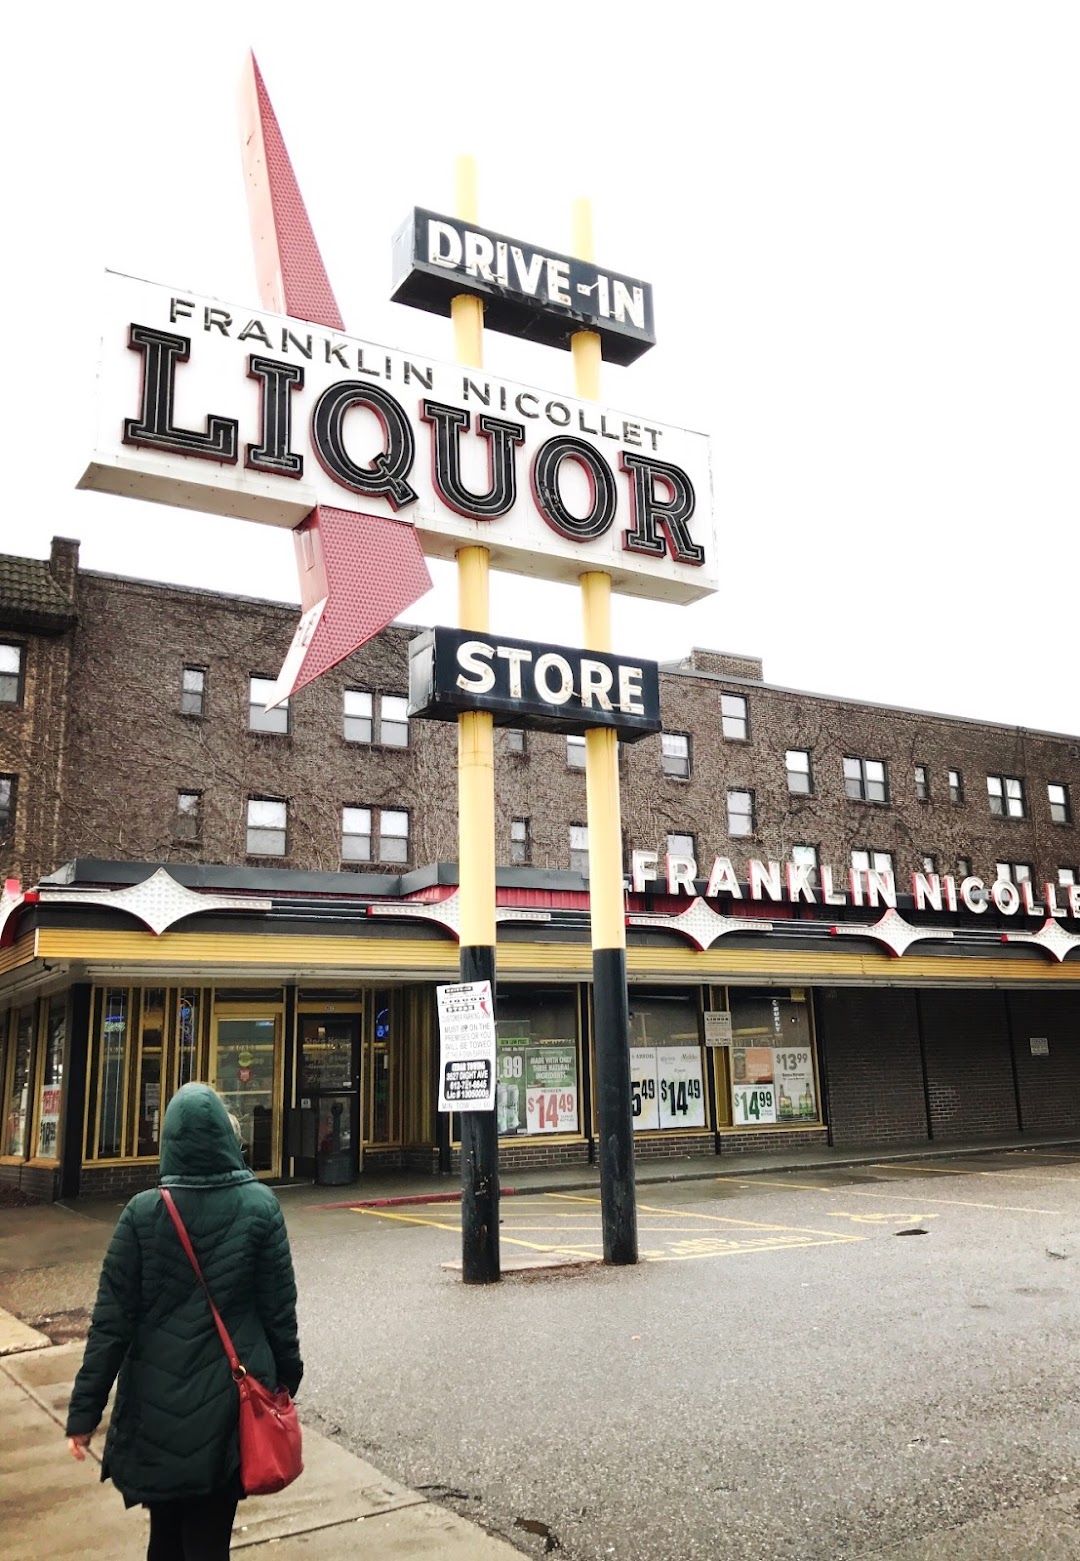 Franklin-Nicollet Liquor Store